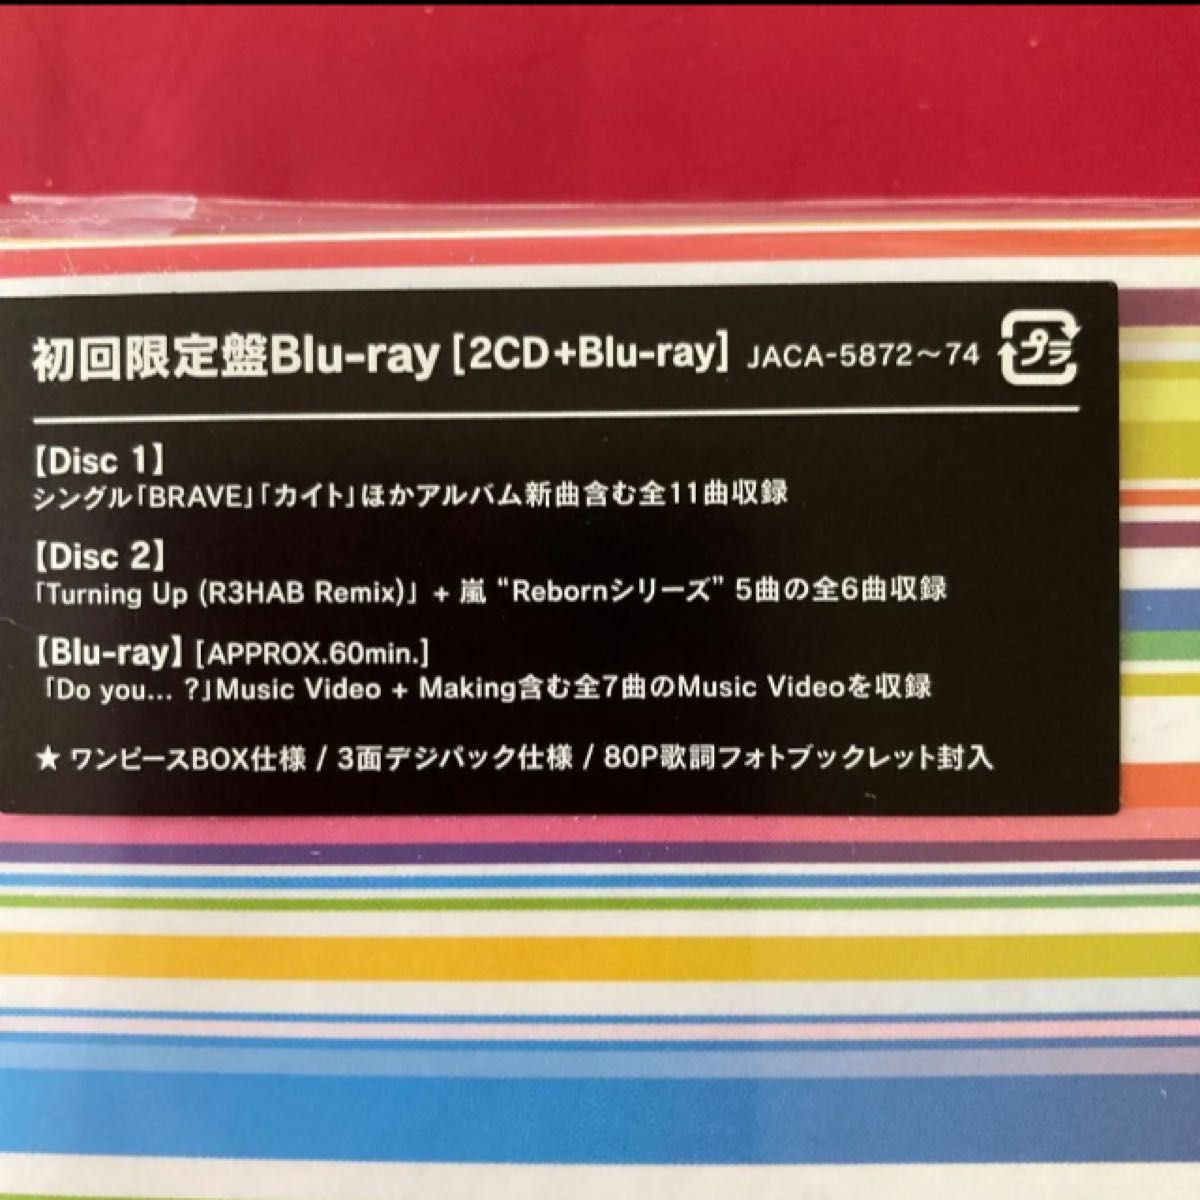 This is 嵐 CDアルバム 初回限定盤 Blu-ray 銀テおまけ 新品未開封品 嵐 ARASHI